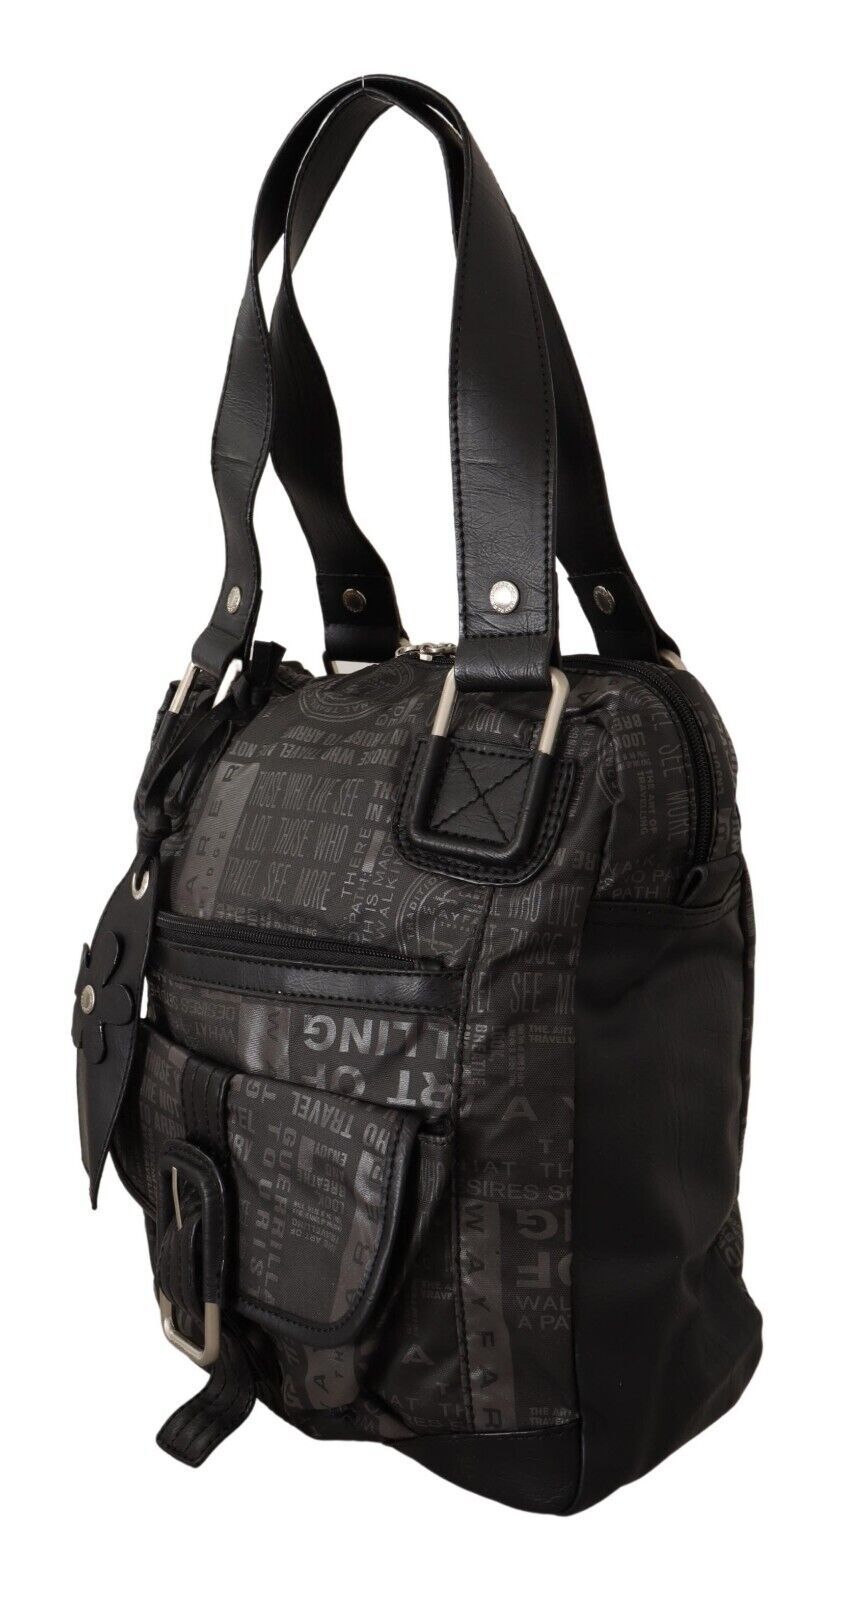 Black Printed Logo Shoulder Handbag Purse Bag